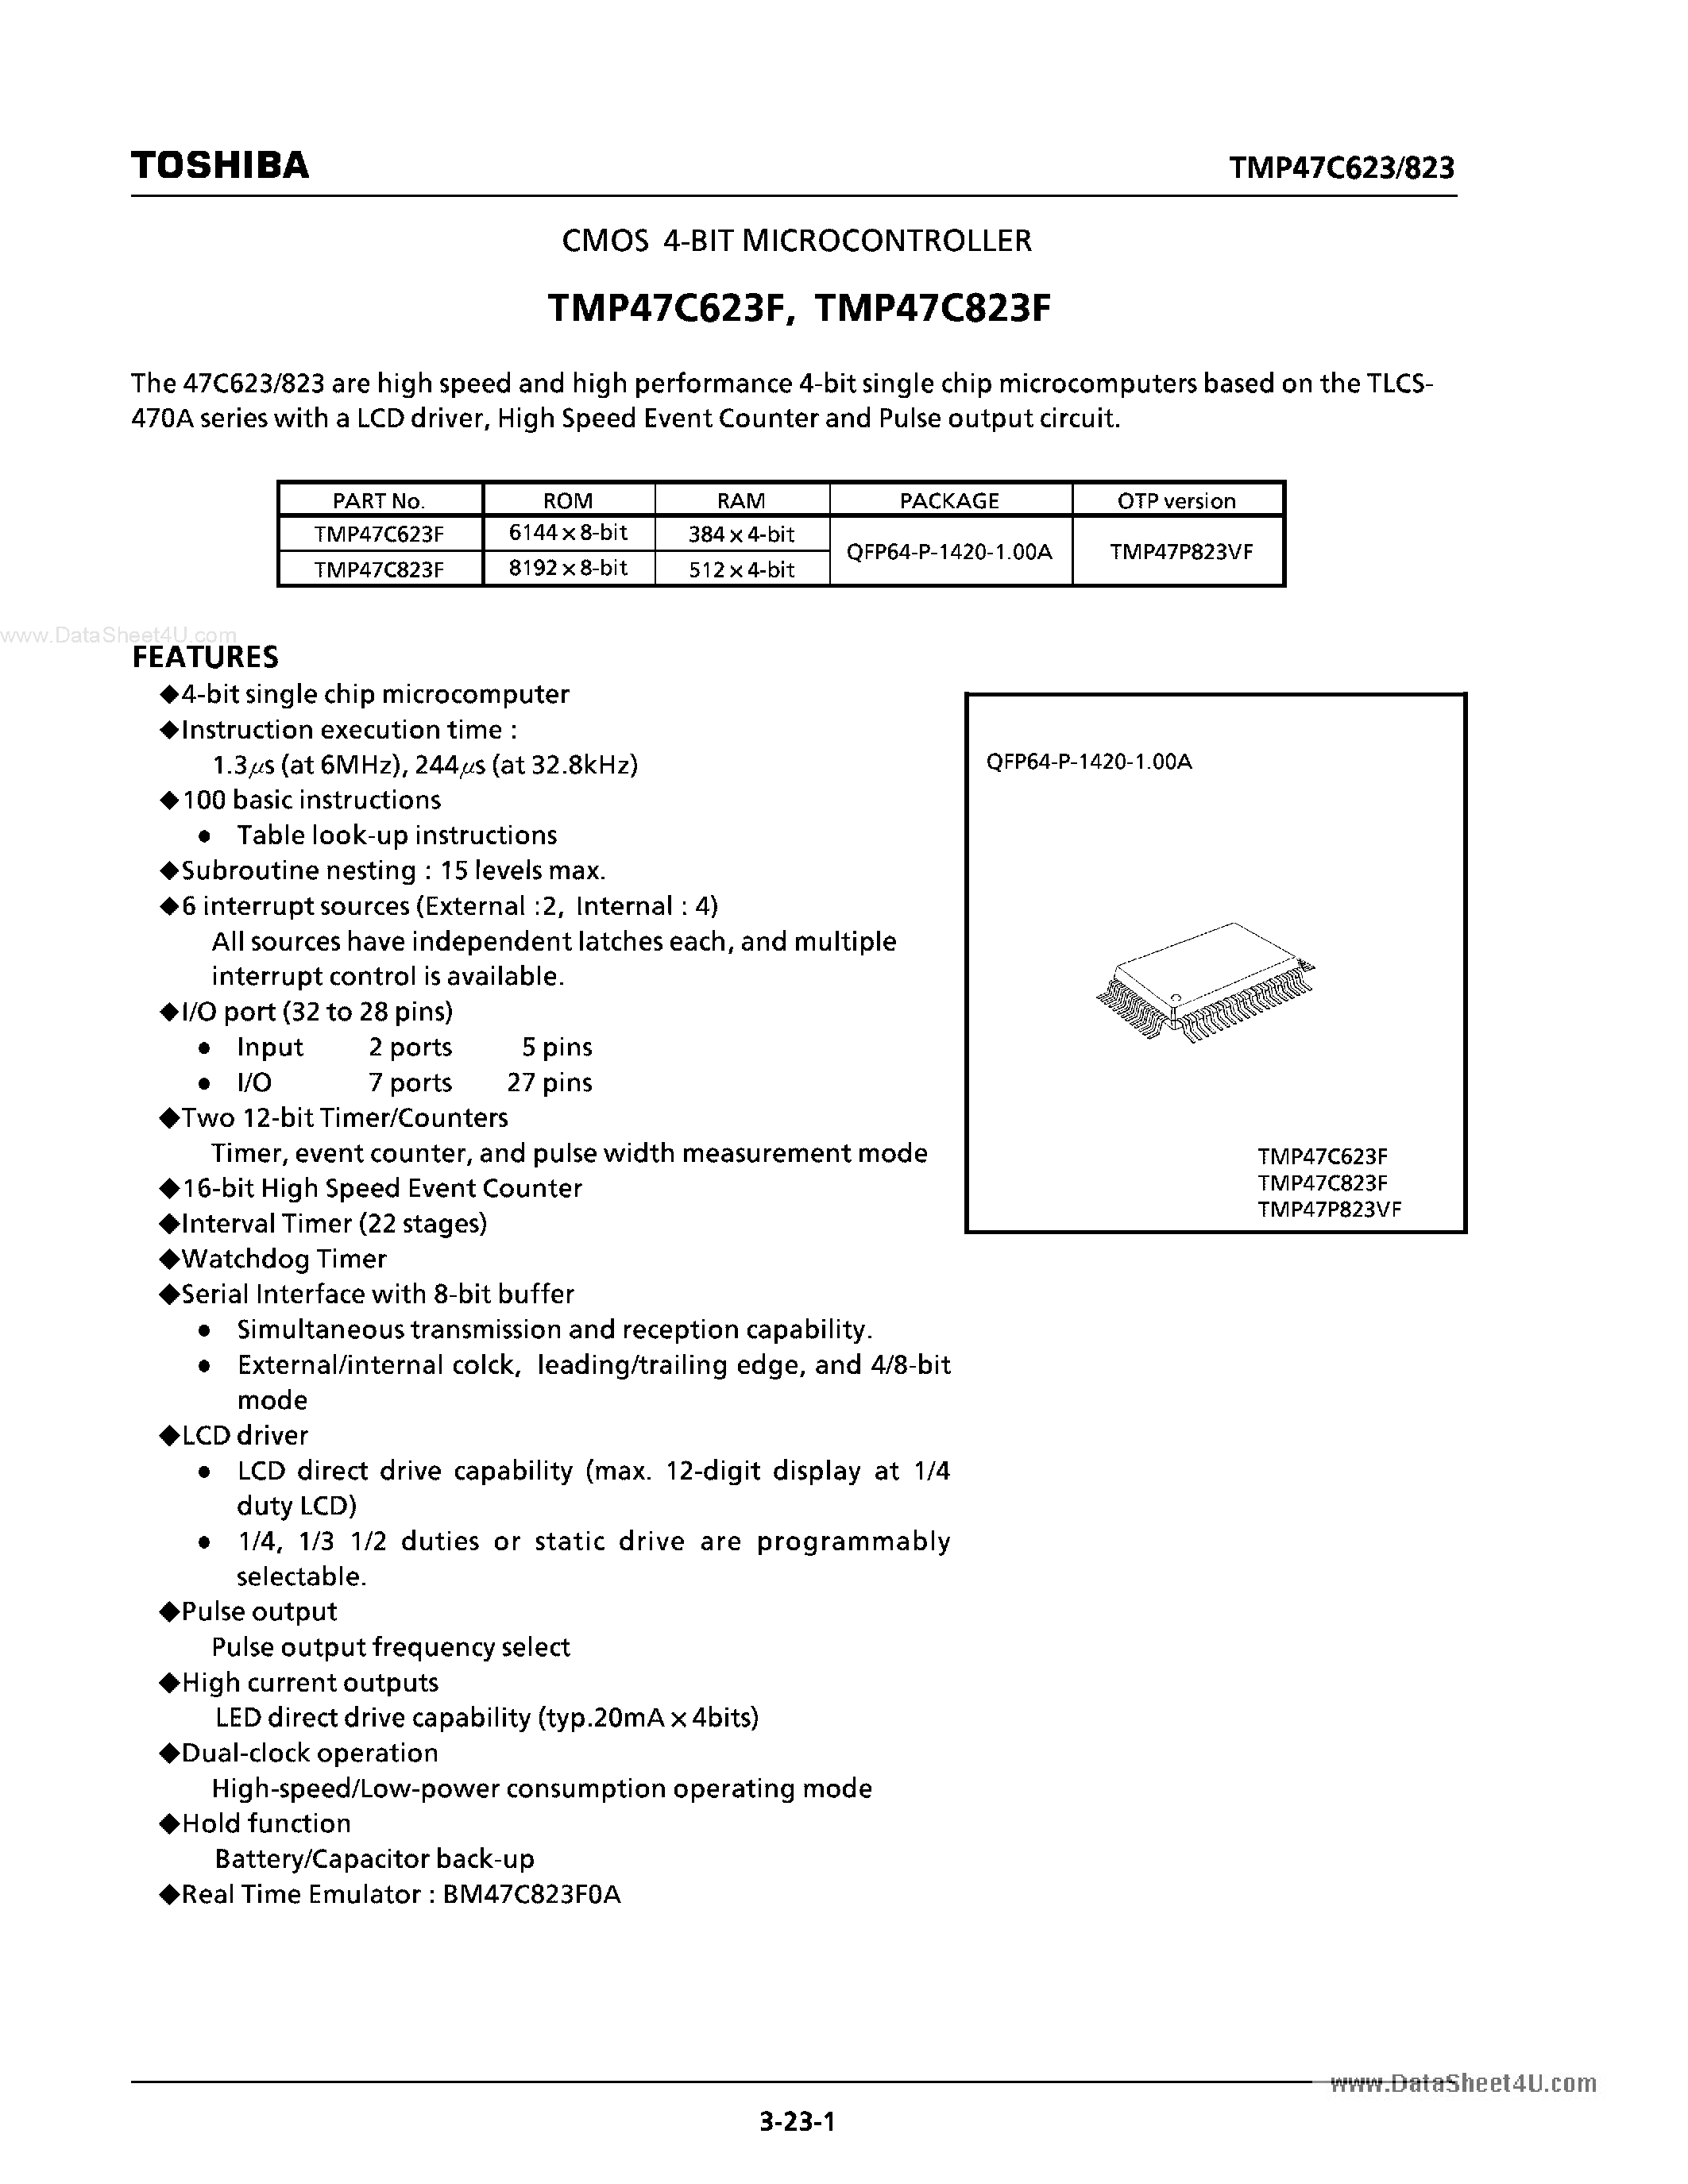 Datasheet TMP47C623F - (TMP47C623F / TMP47C823F) CMOS 4-bit Microcontroller page 1